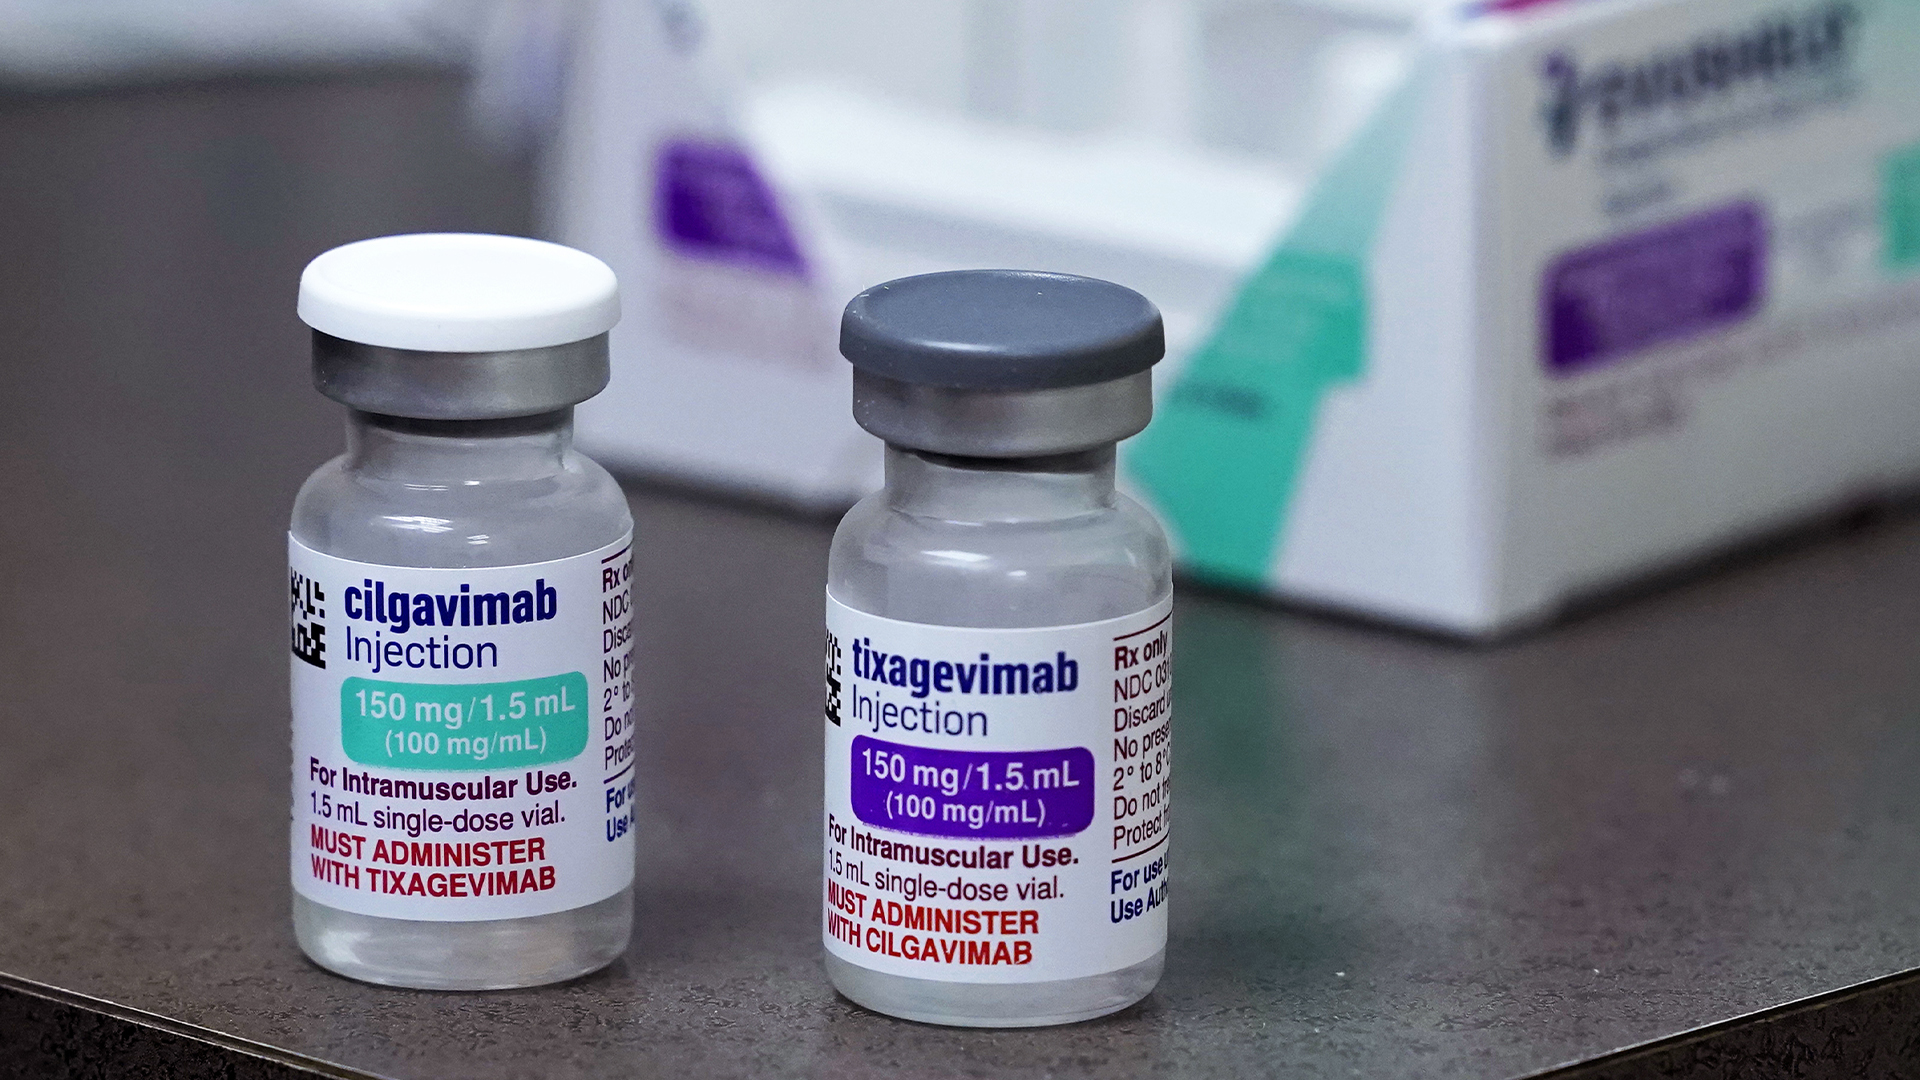 Les premières doses d’EvusheldMC, un médicament d’AstraZeneca contre la COVID-19, sont désormais disponibles au Québec.